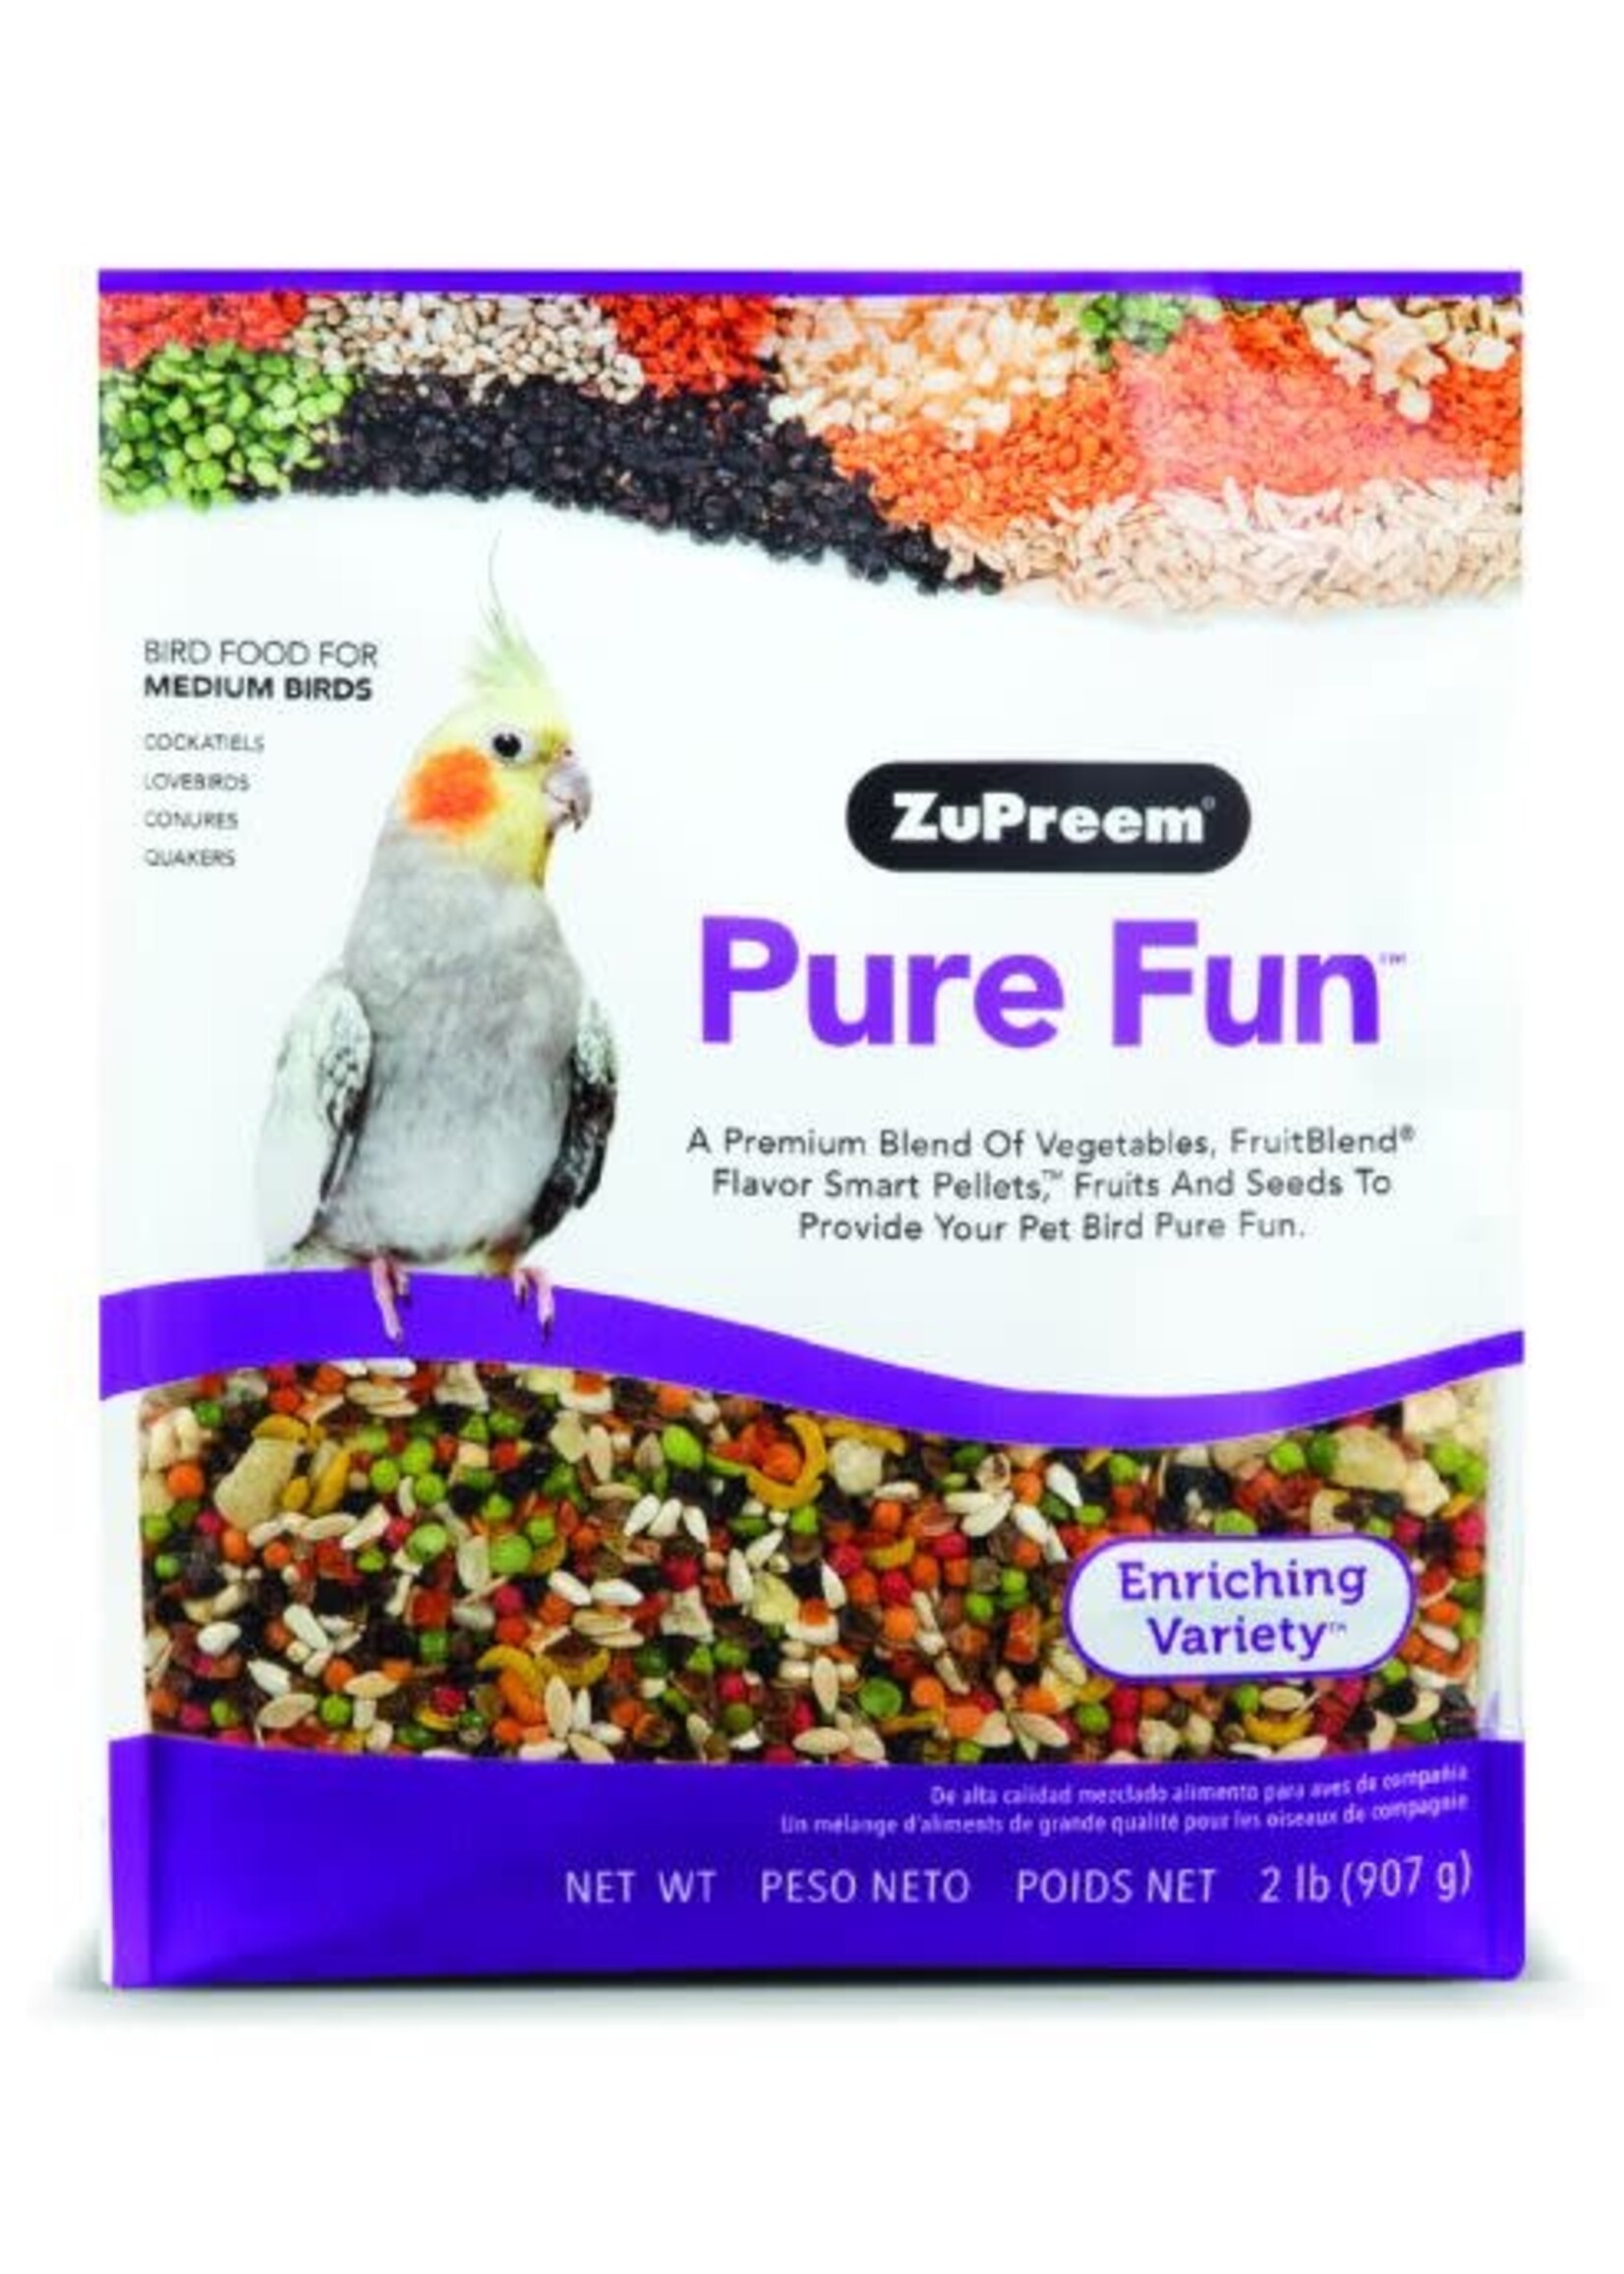 Zupreem ZuPreem "Pure Fun" Food For Cockatiel, Lovebirds & Medium Birds 2lbs 36020